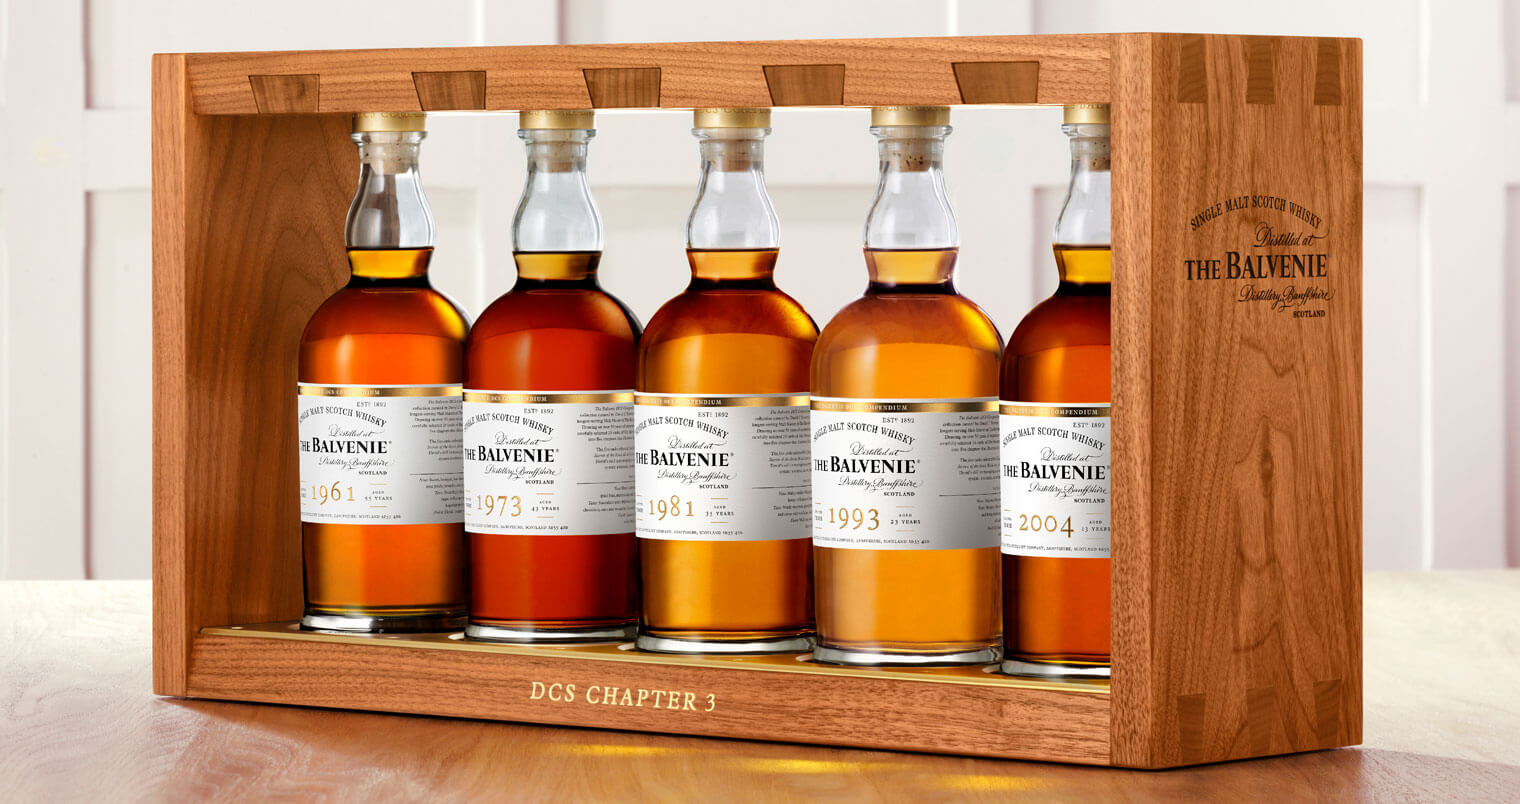 The Balvenie DCS Compendium Chapter Three Whiskies, bottle display in frame